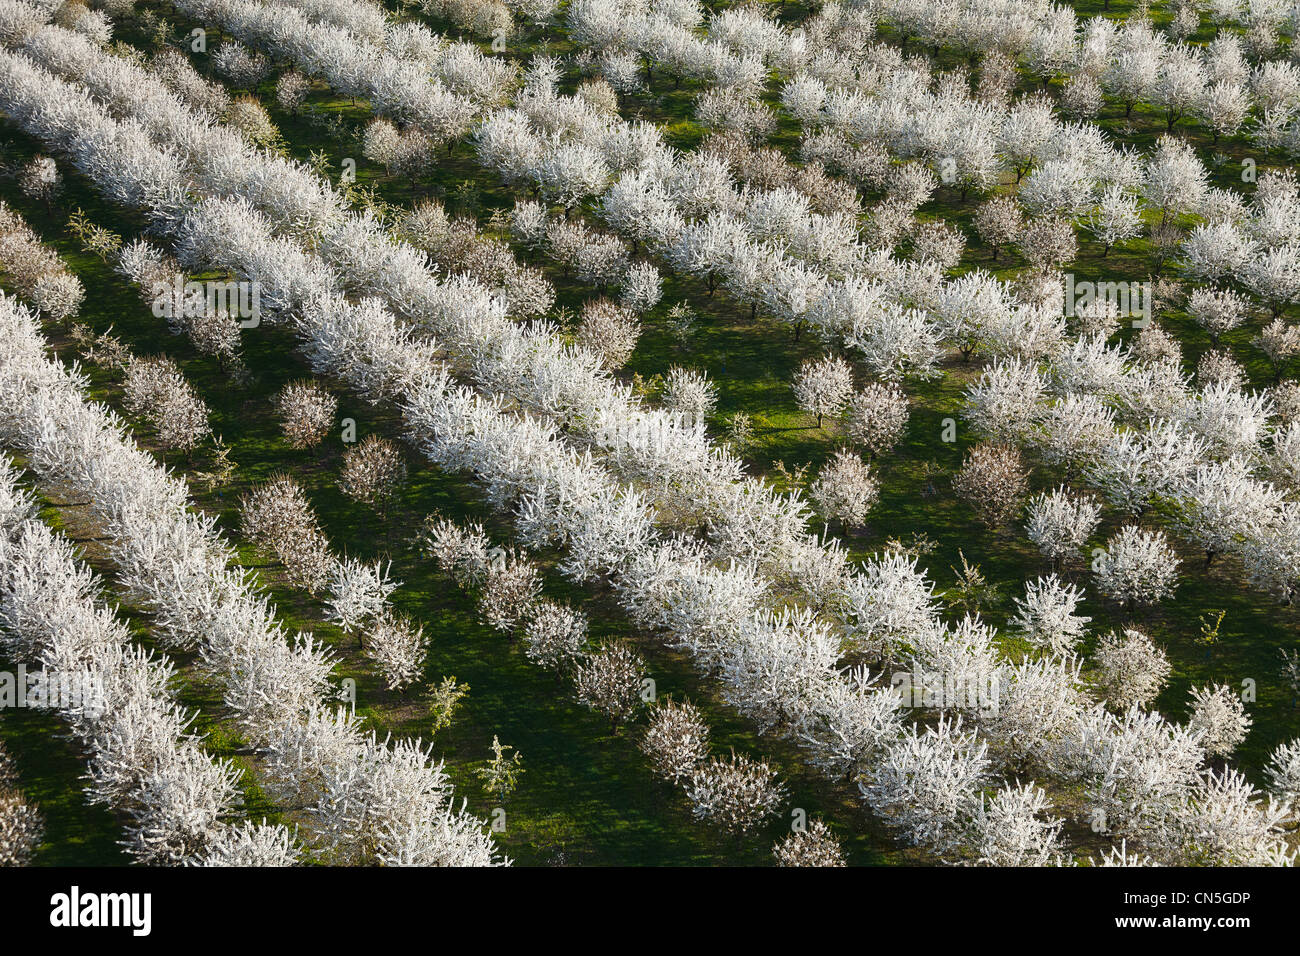 France, Val d'Oise, La Chapelle en Vexin, cherry trees in bloom (aerial view) Stock Photo